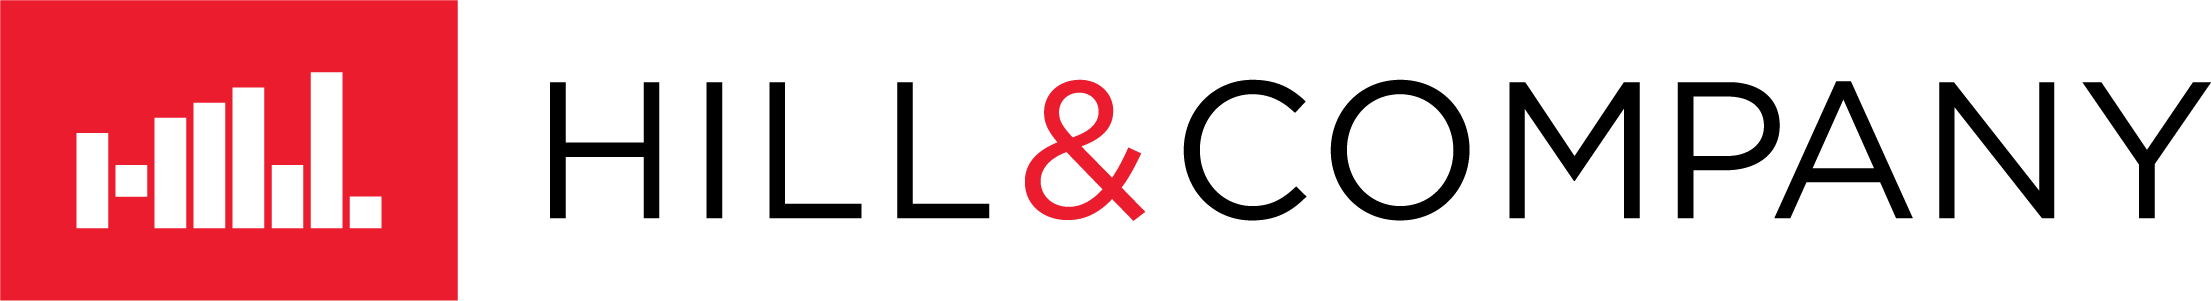 red, white, and black horizontal hill & company logo